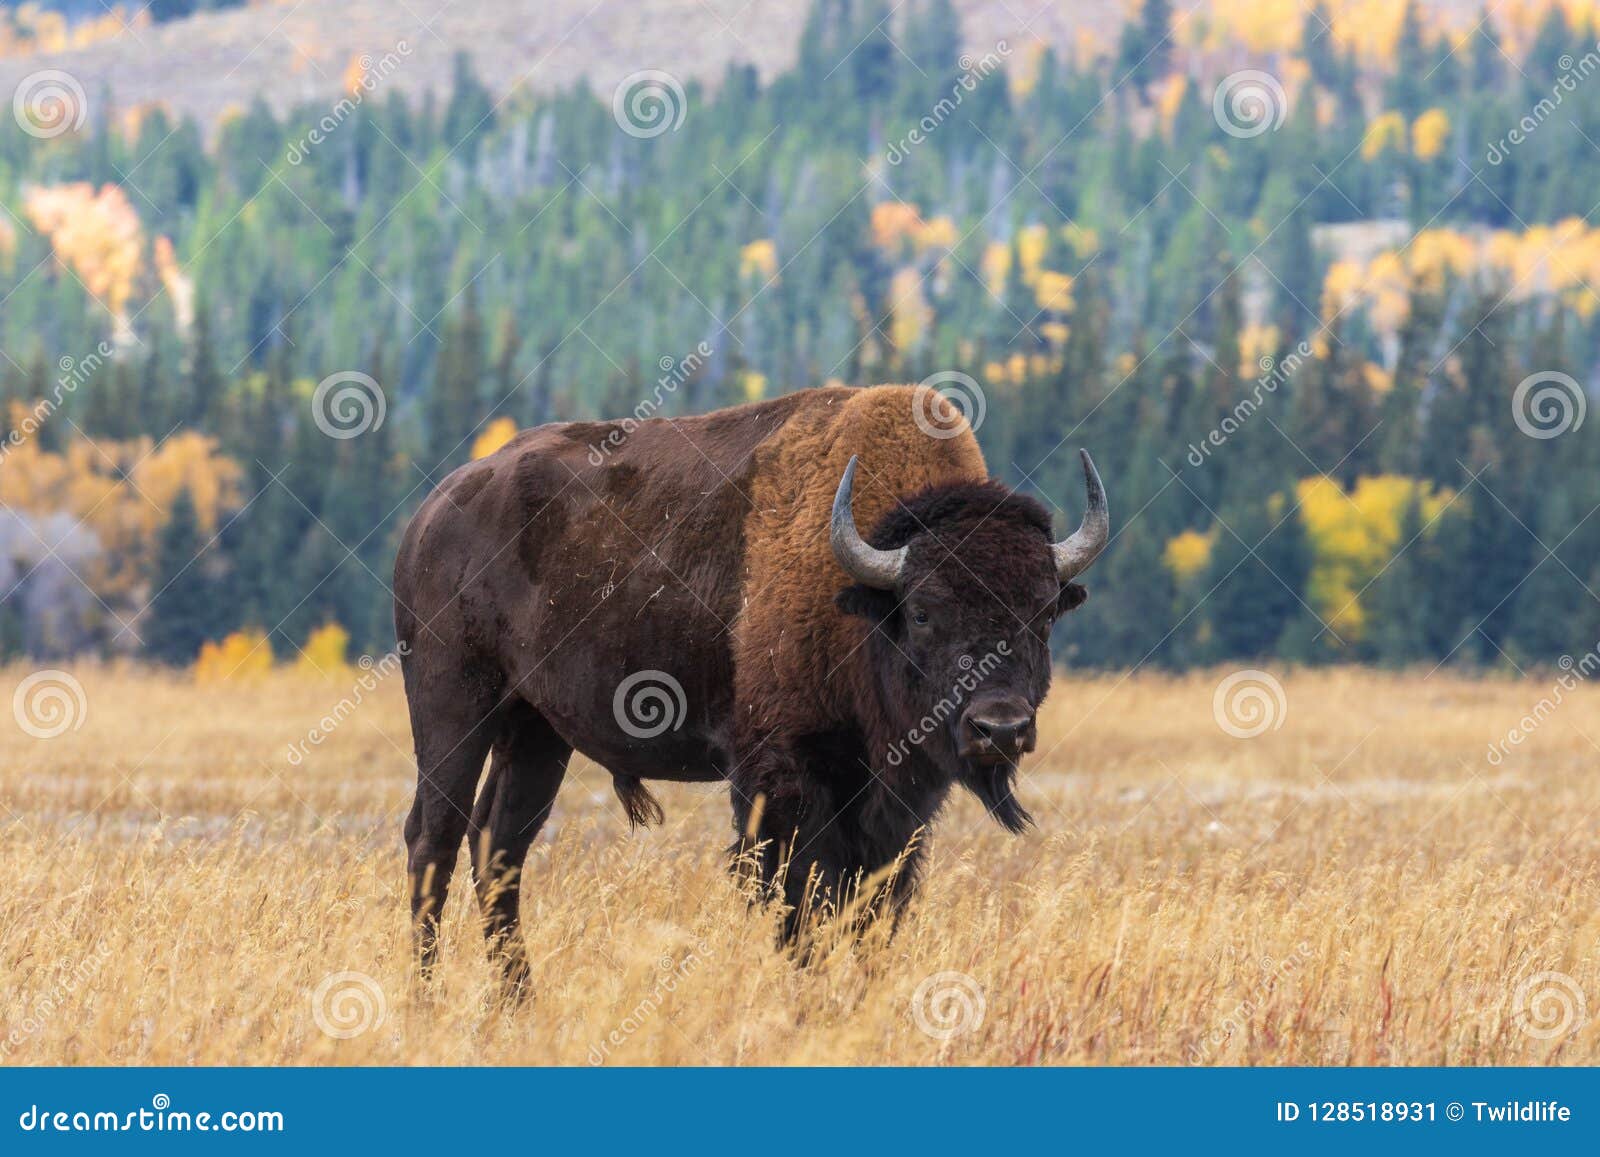 voks Store fusionere American Bison in Autumn stock image. Image of buffalo - 128518931